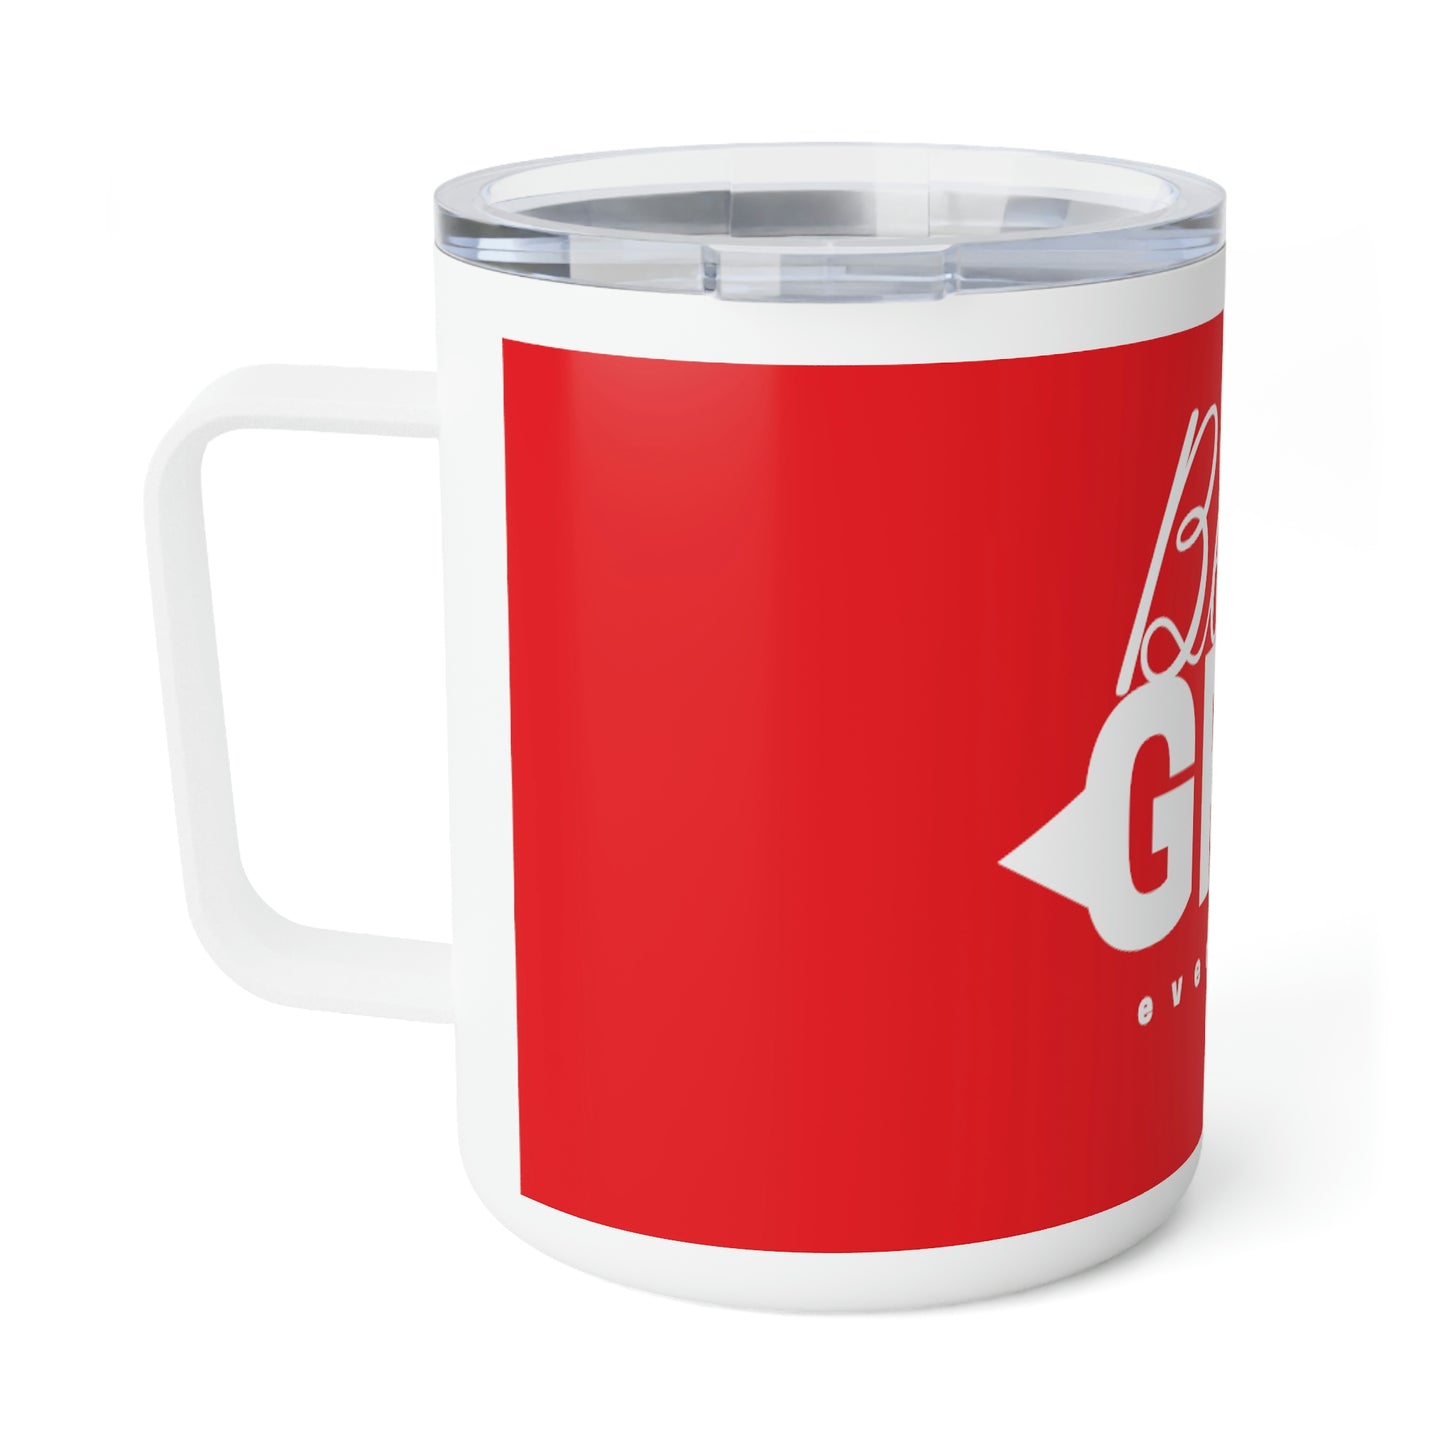 Red Insulated Coffee Mug, 10oz